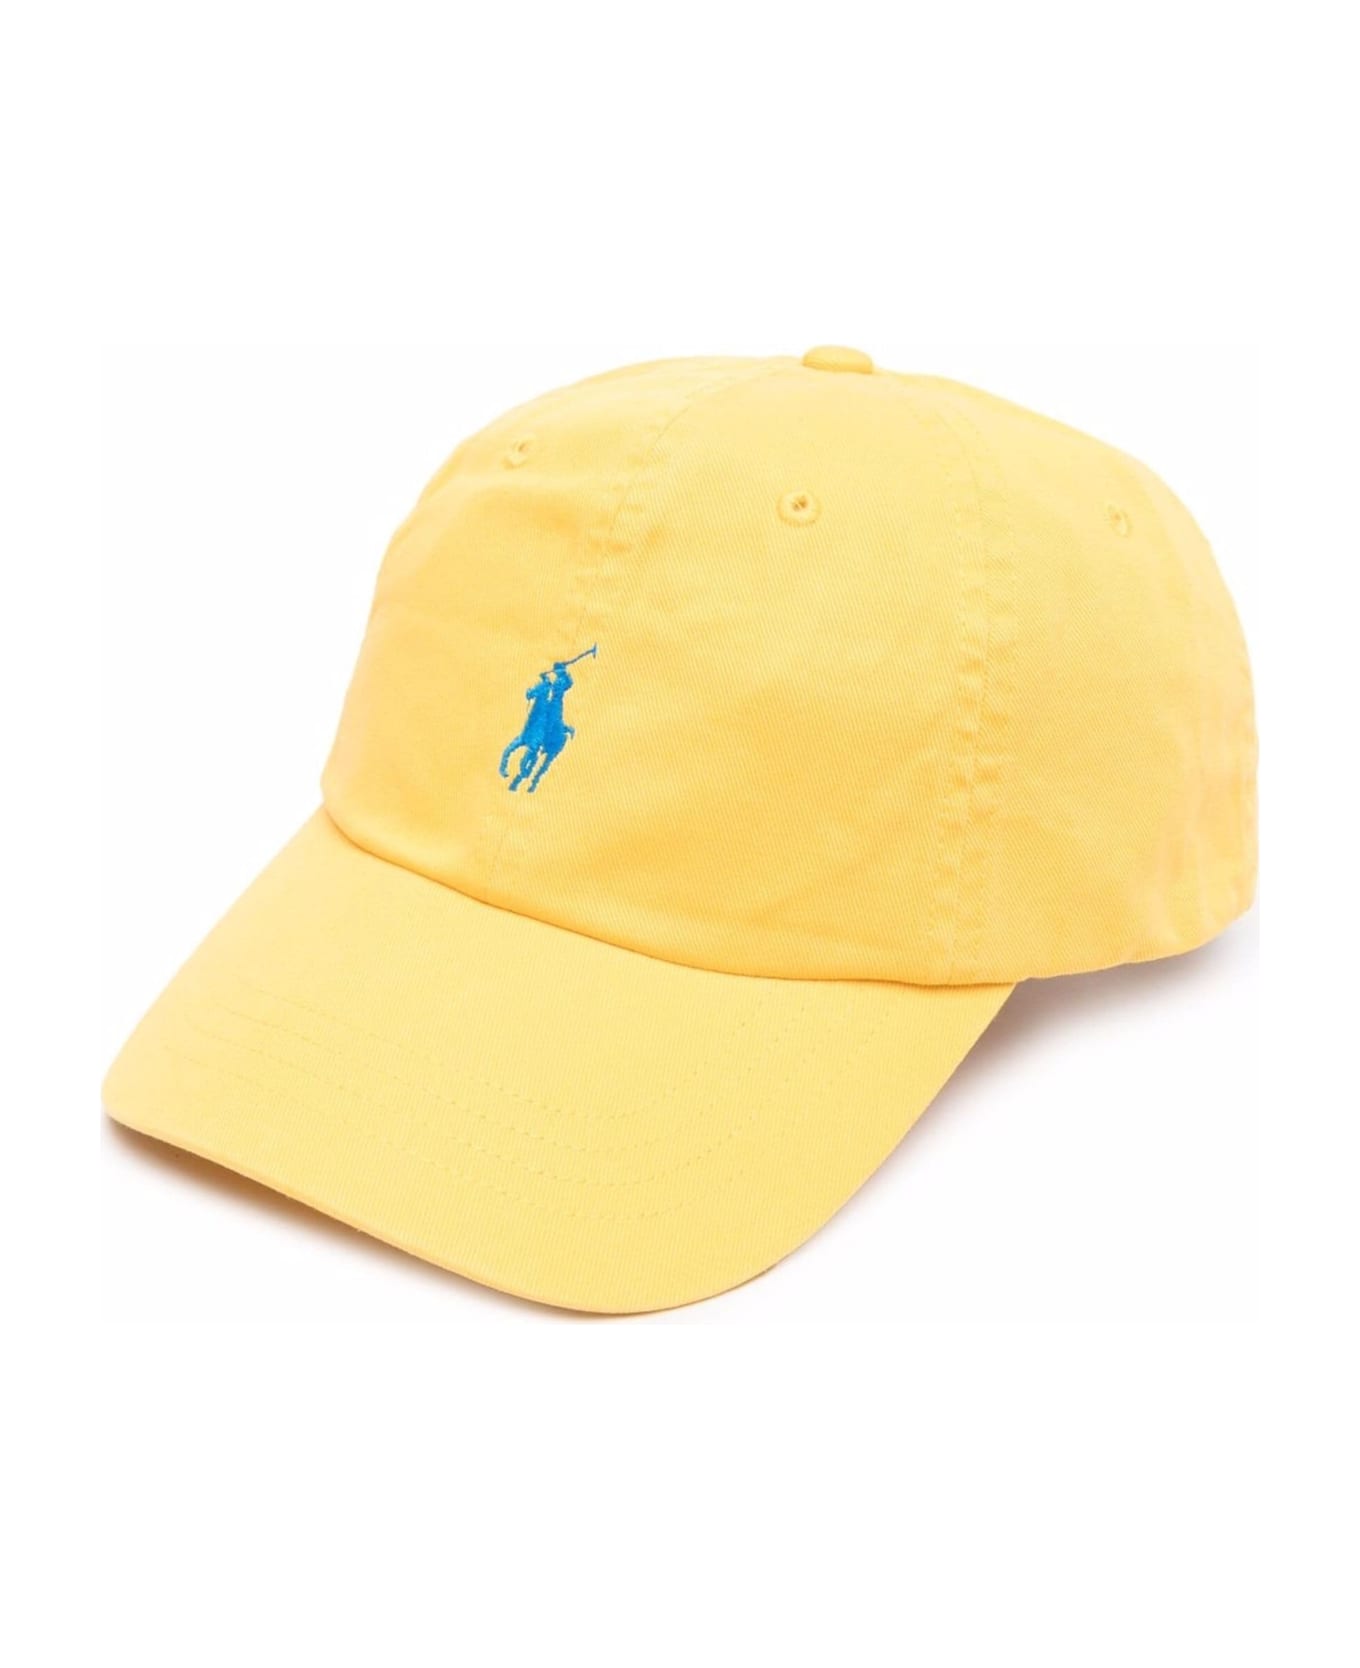 Ralph Lauren Yellow Baseball Hat With Contrasting Pony - Yellow 帽子